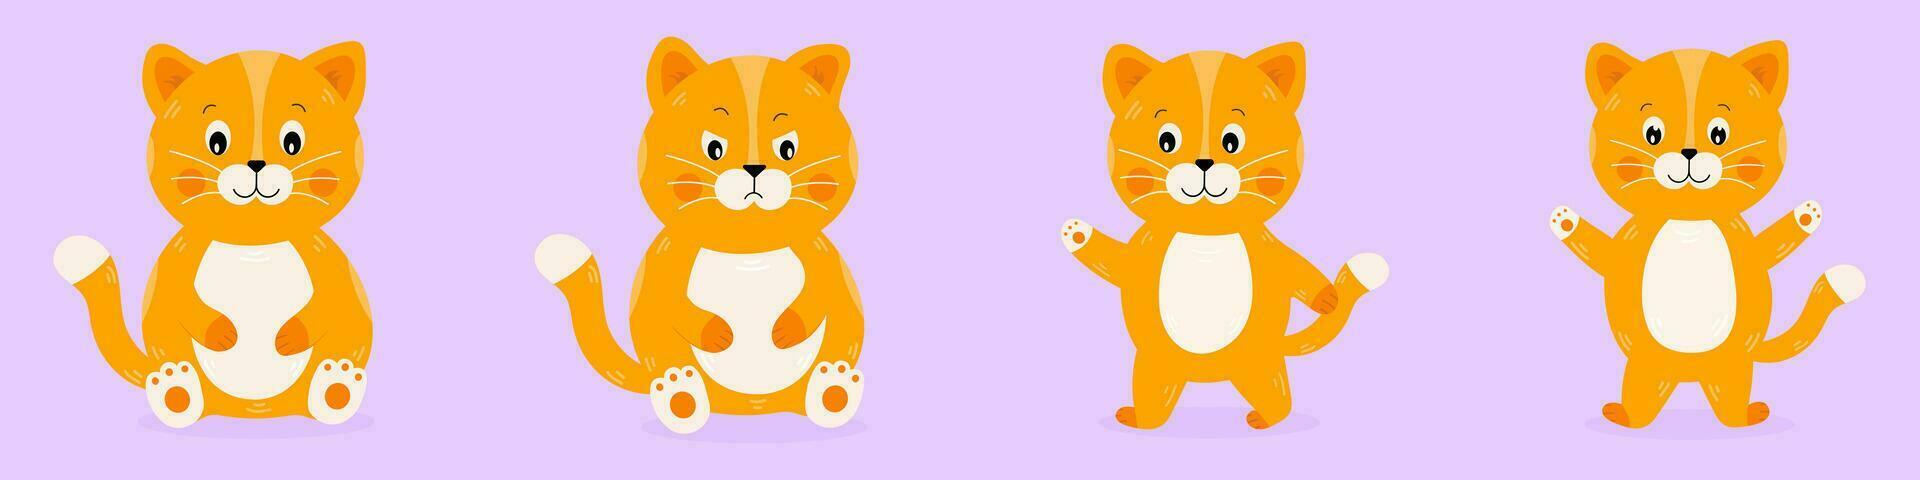 conjunto de linda dibujos animados rojo gatos feliz, gruñón, bonito gato. sesión, caminando gato. gracioso caracteres. vector ilustración